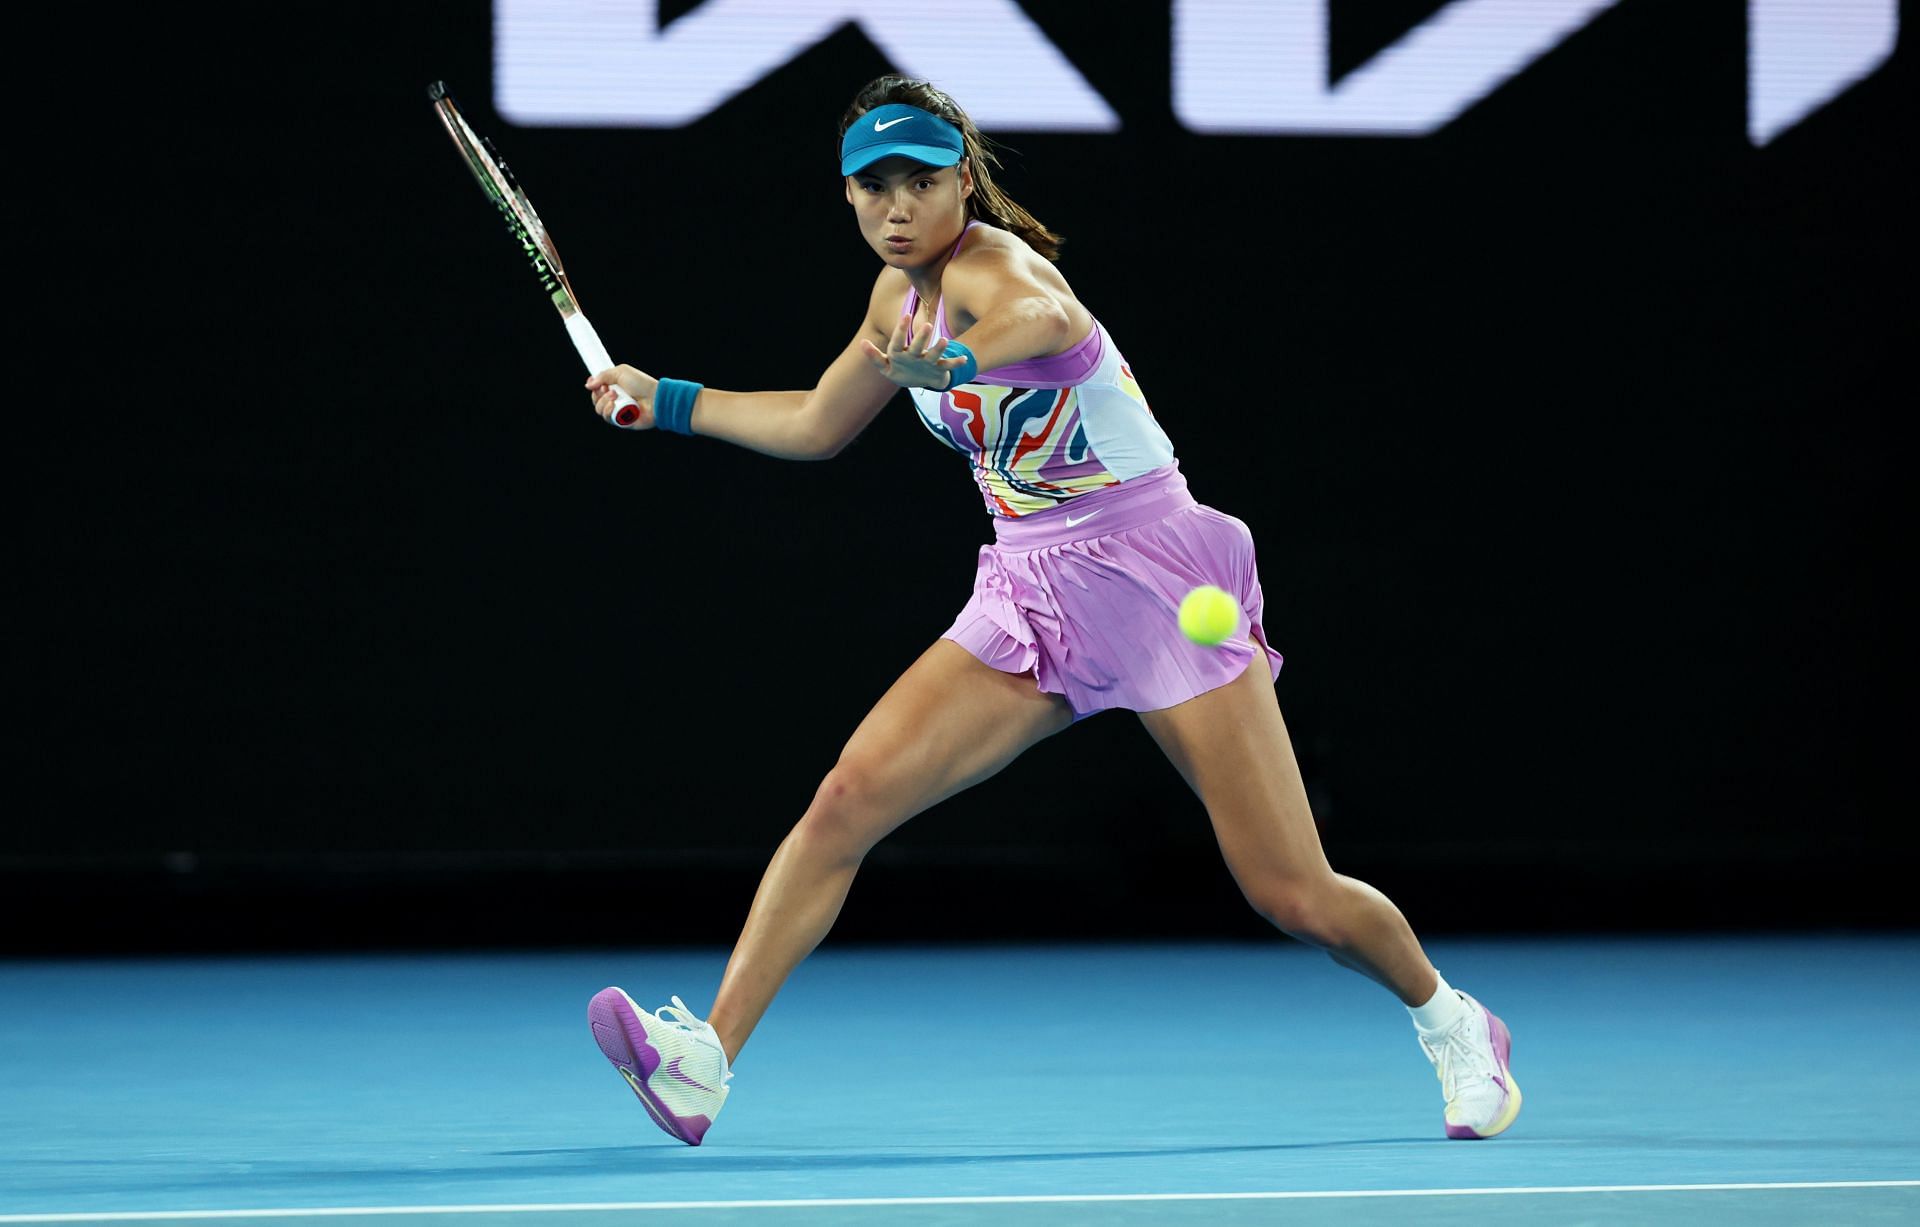 Emma Raducanu in action at the Australian Open